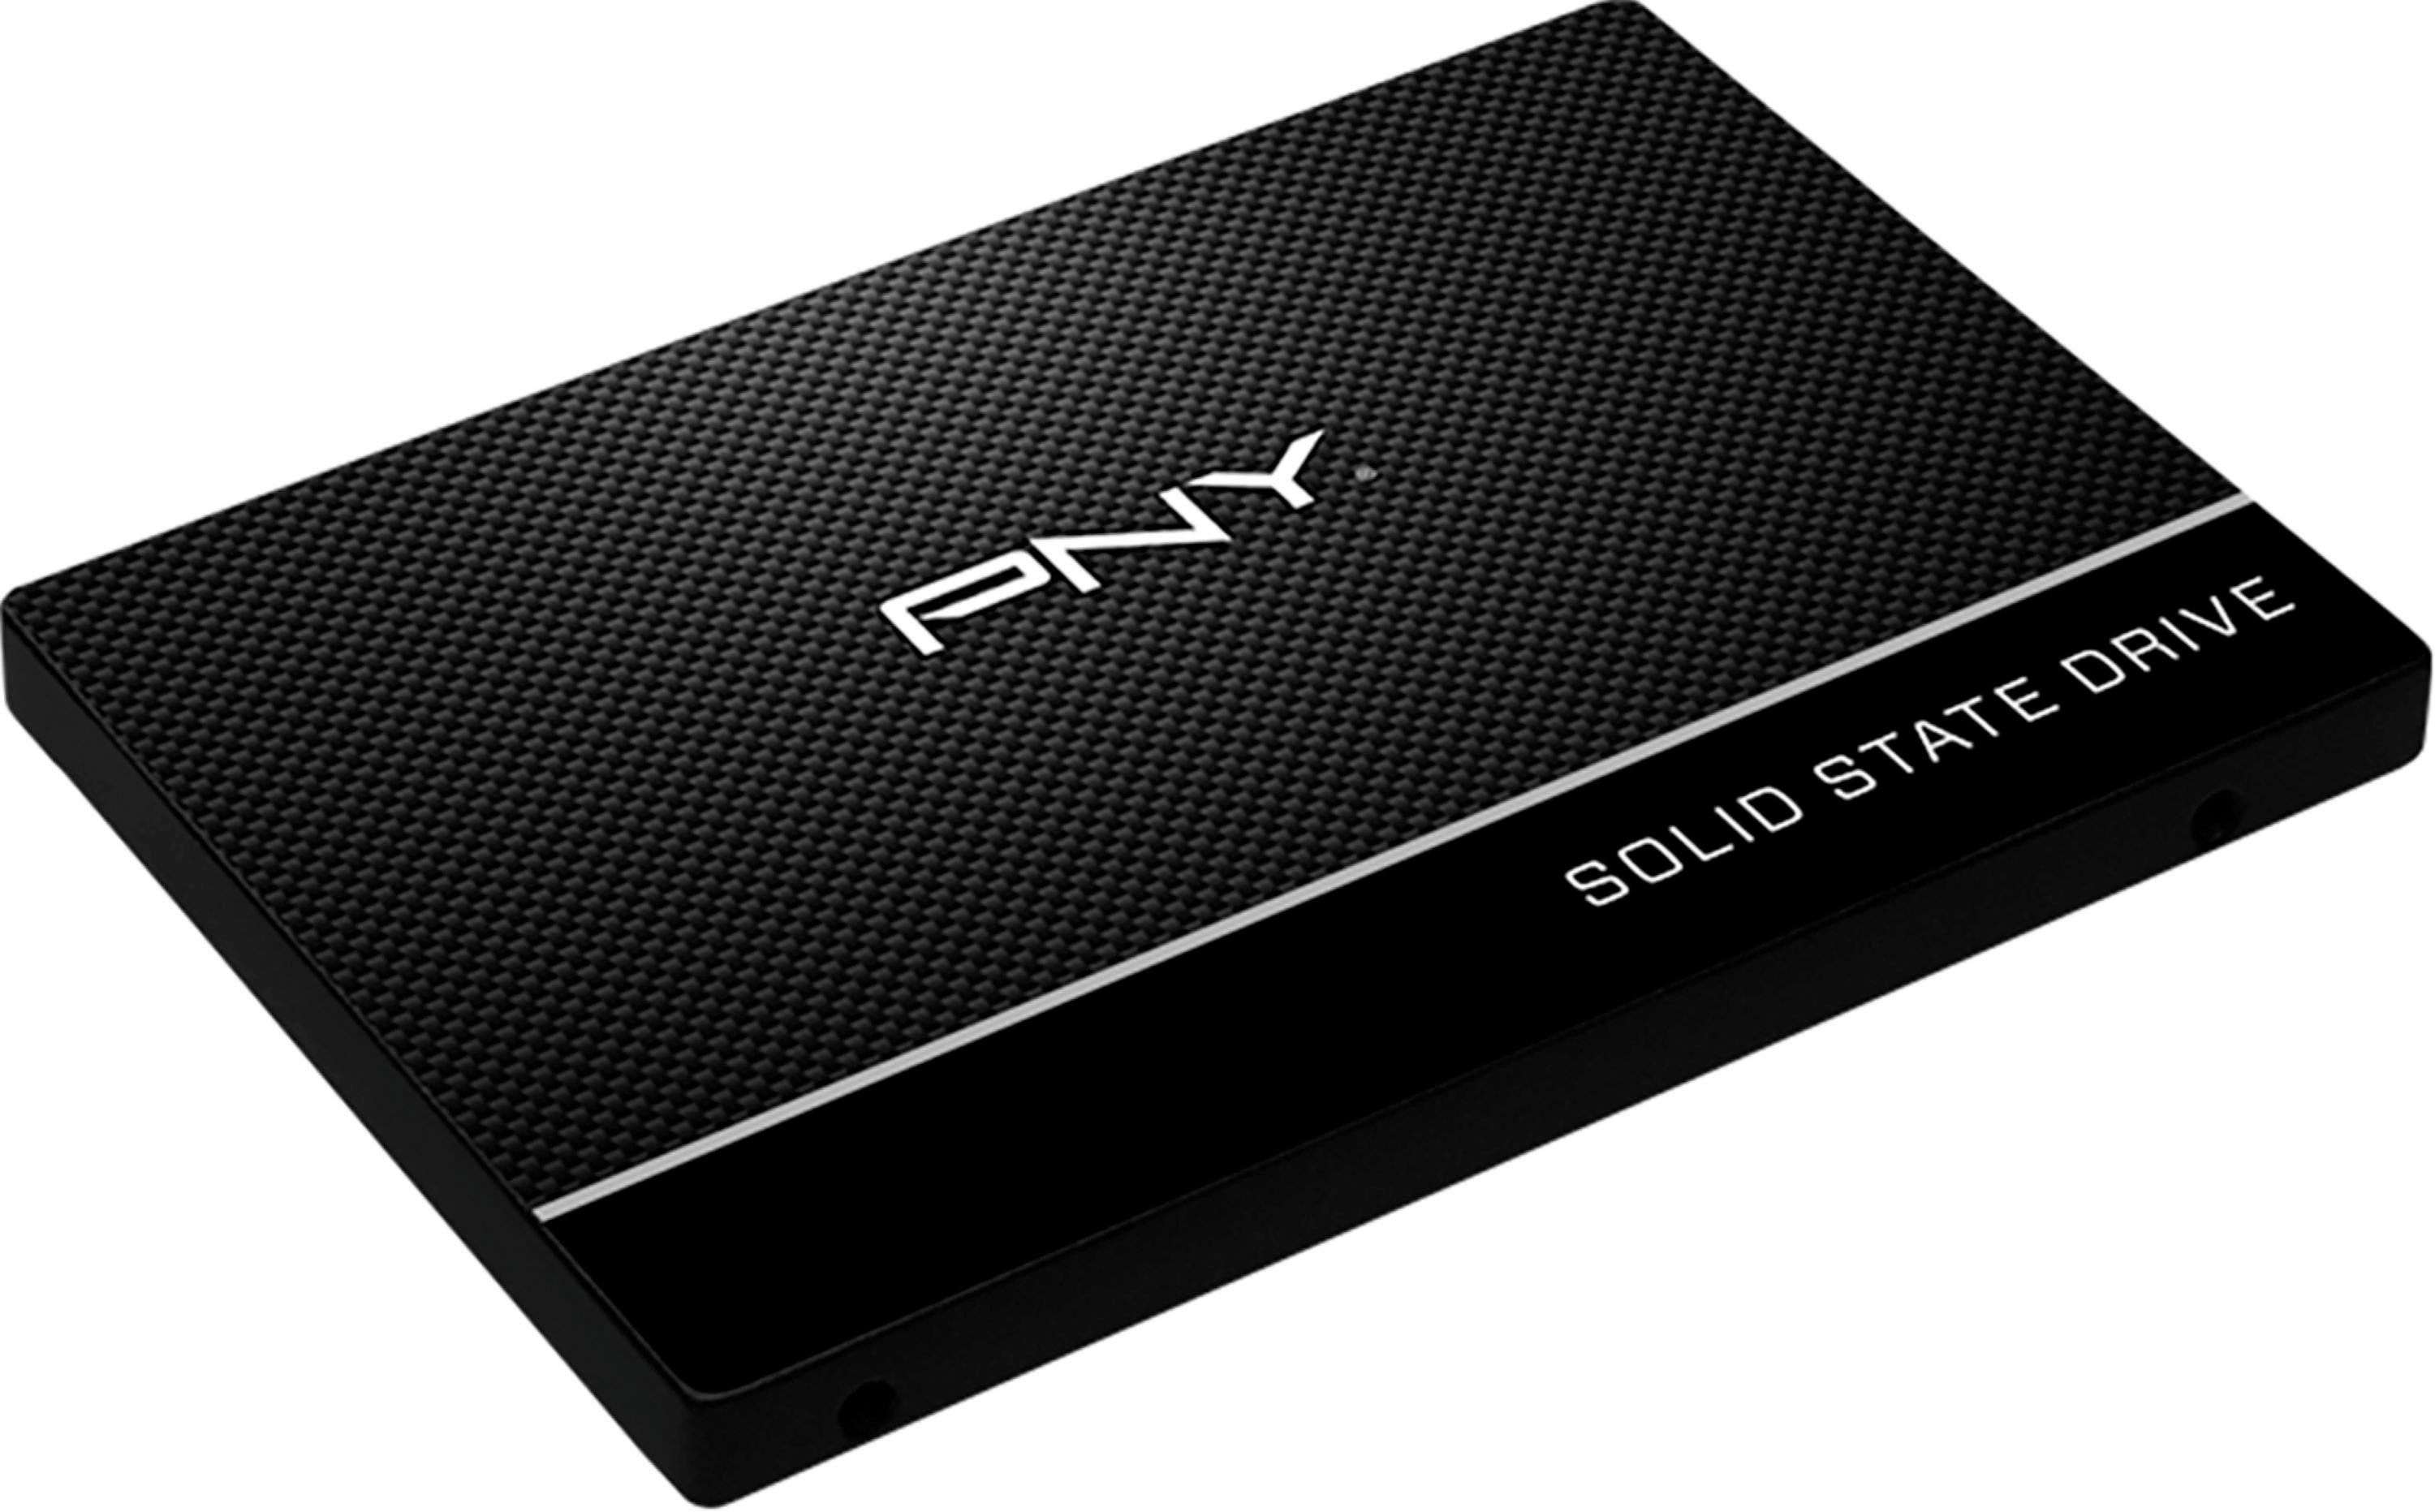 Disque Dur PNY CS900 M.2 2280 SATA 500 GB - Big Shop Technology